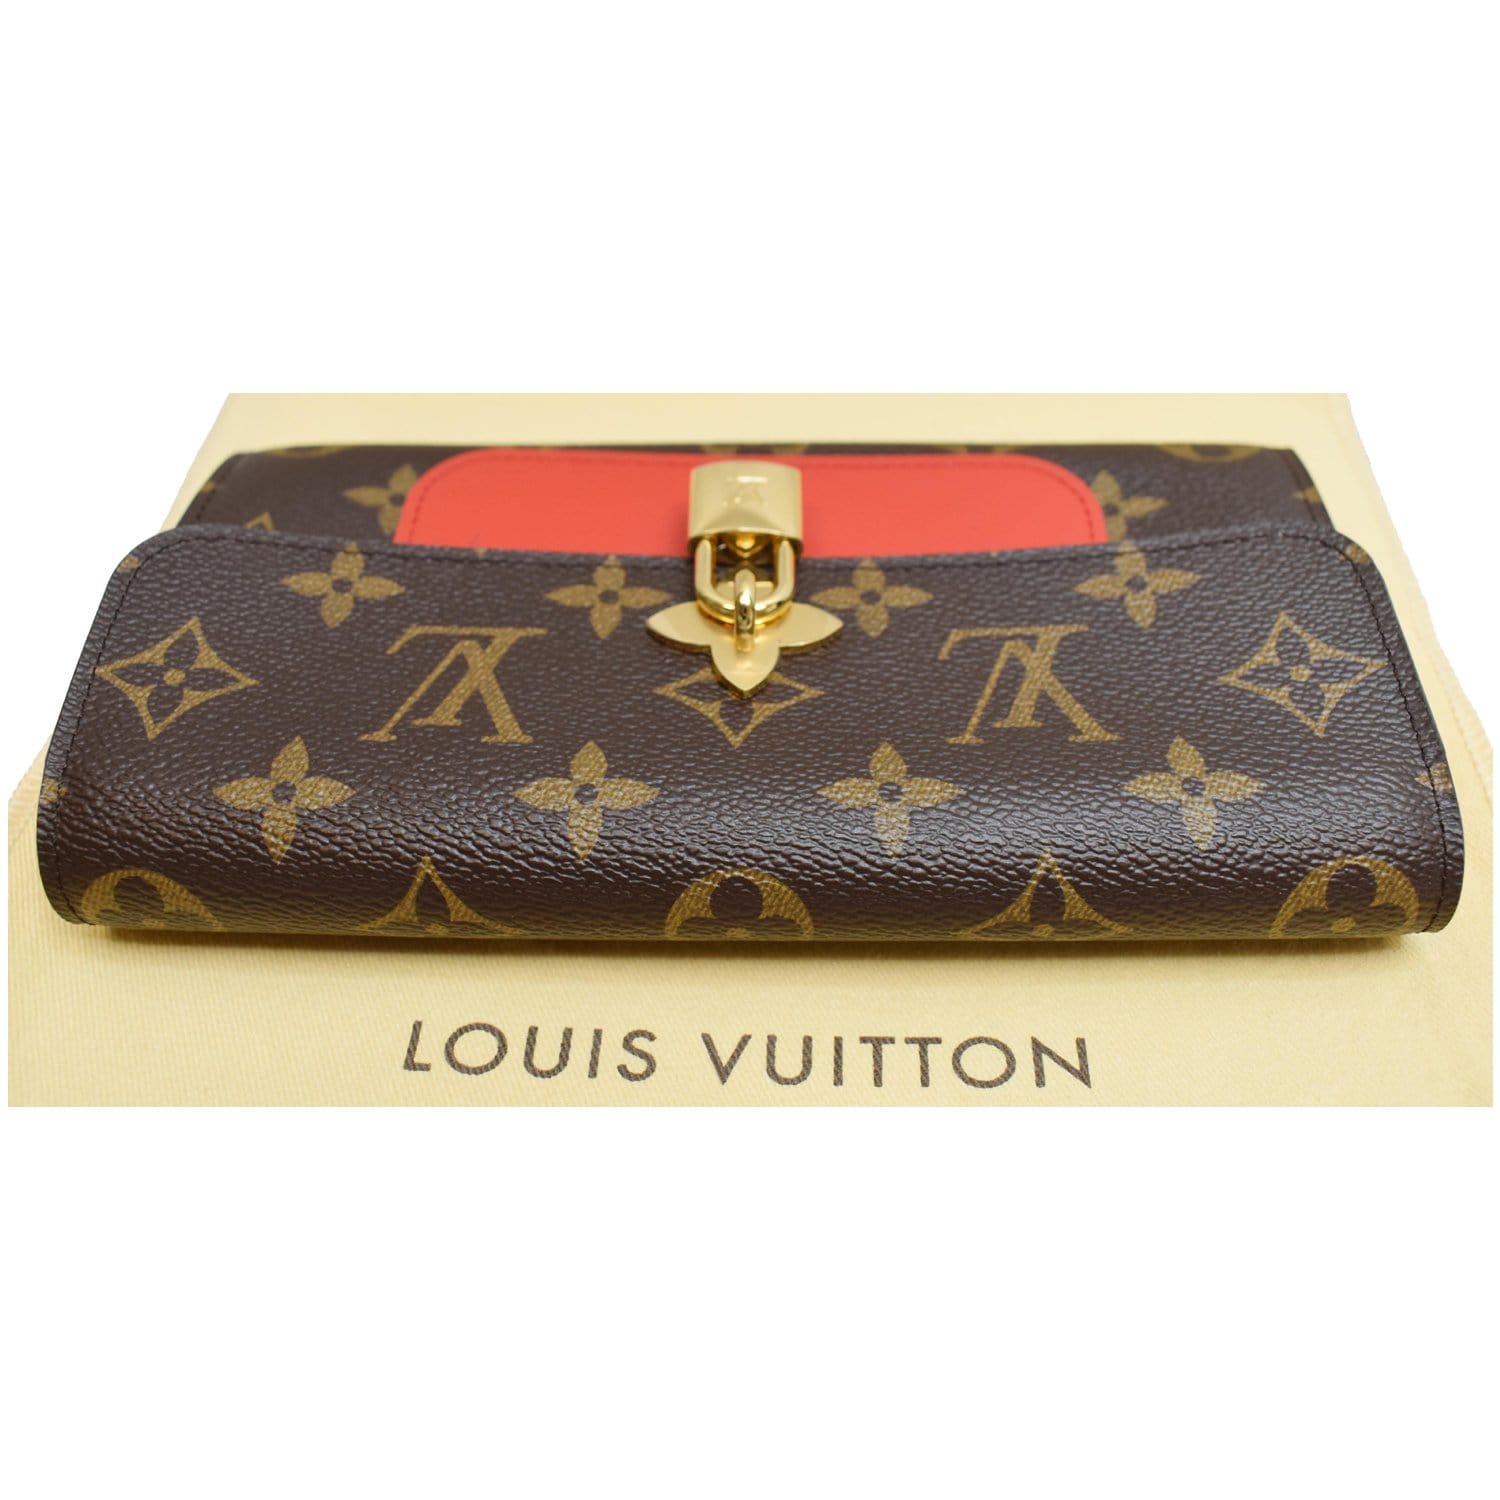 RvceShops Revival  Red Louis Vuitton Monogram Flore Wallet On